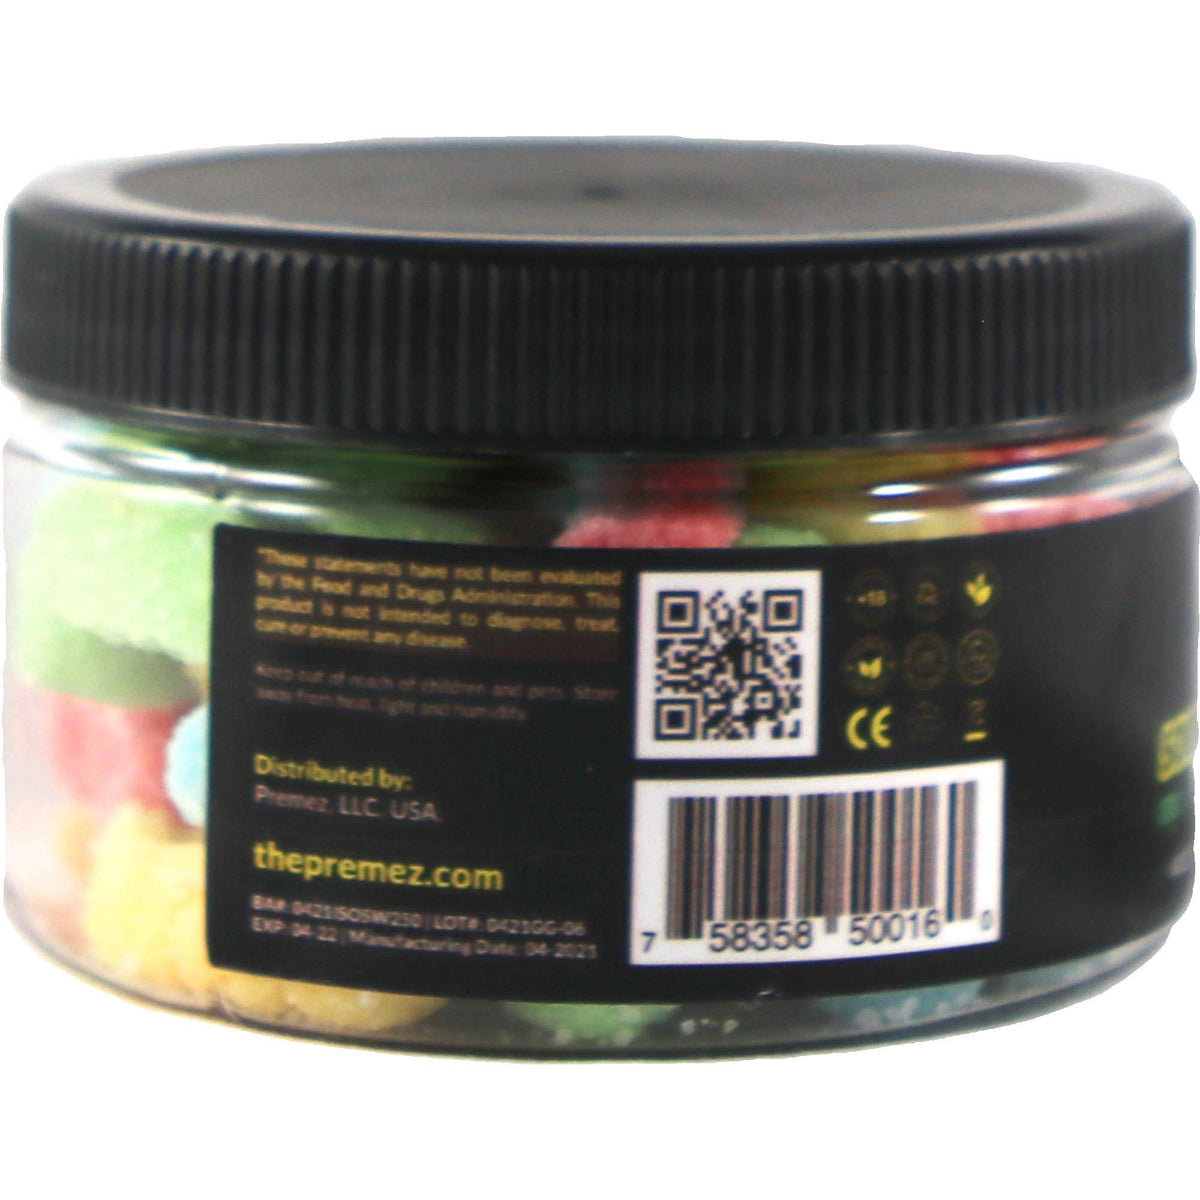 Sour Worms PremeZ CBD Gummies Jars